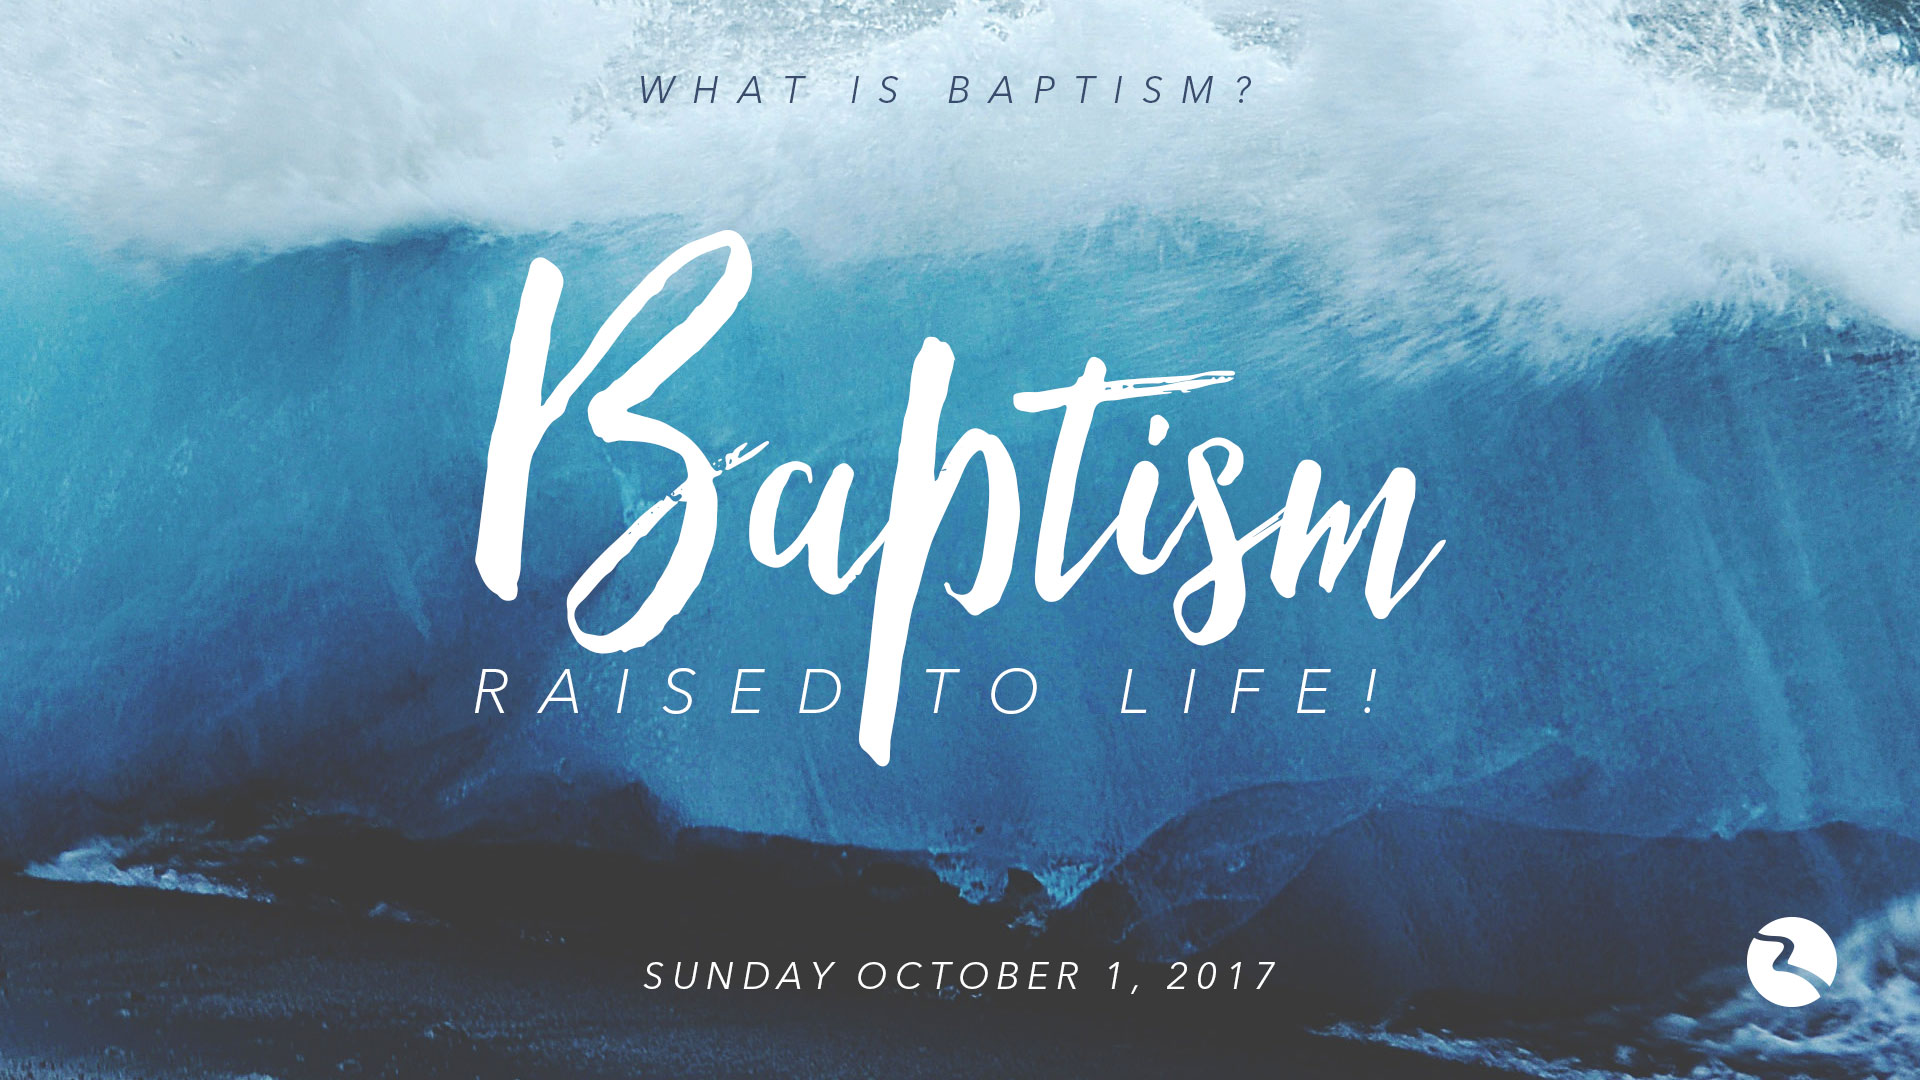 Hd Images Of Baptism - HD Wallpaper 